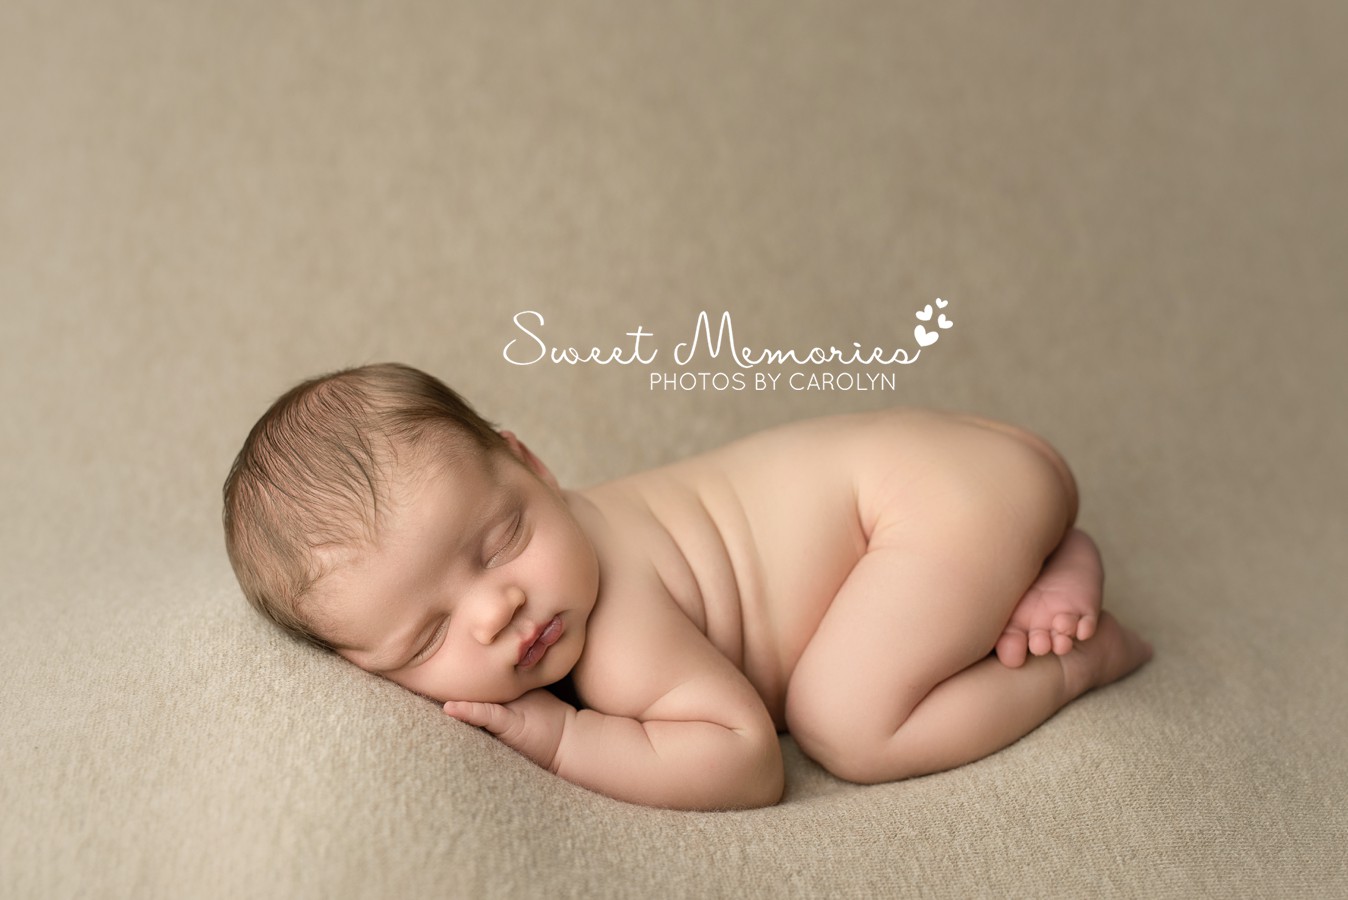 Wrapped Newborn Boy bum up on tan Newborn Photography | Austin Texas Area Newborn Photographer | Sweet Memories Photos by Carolyn